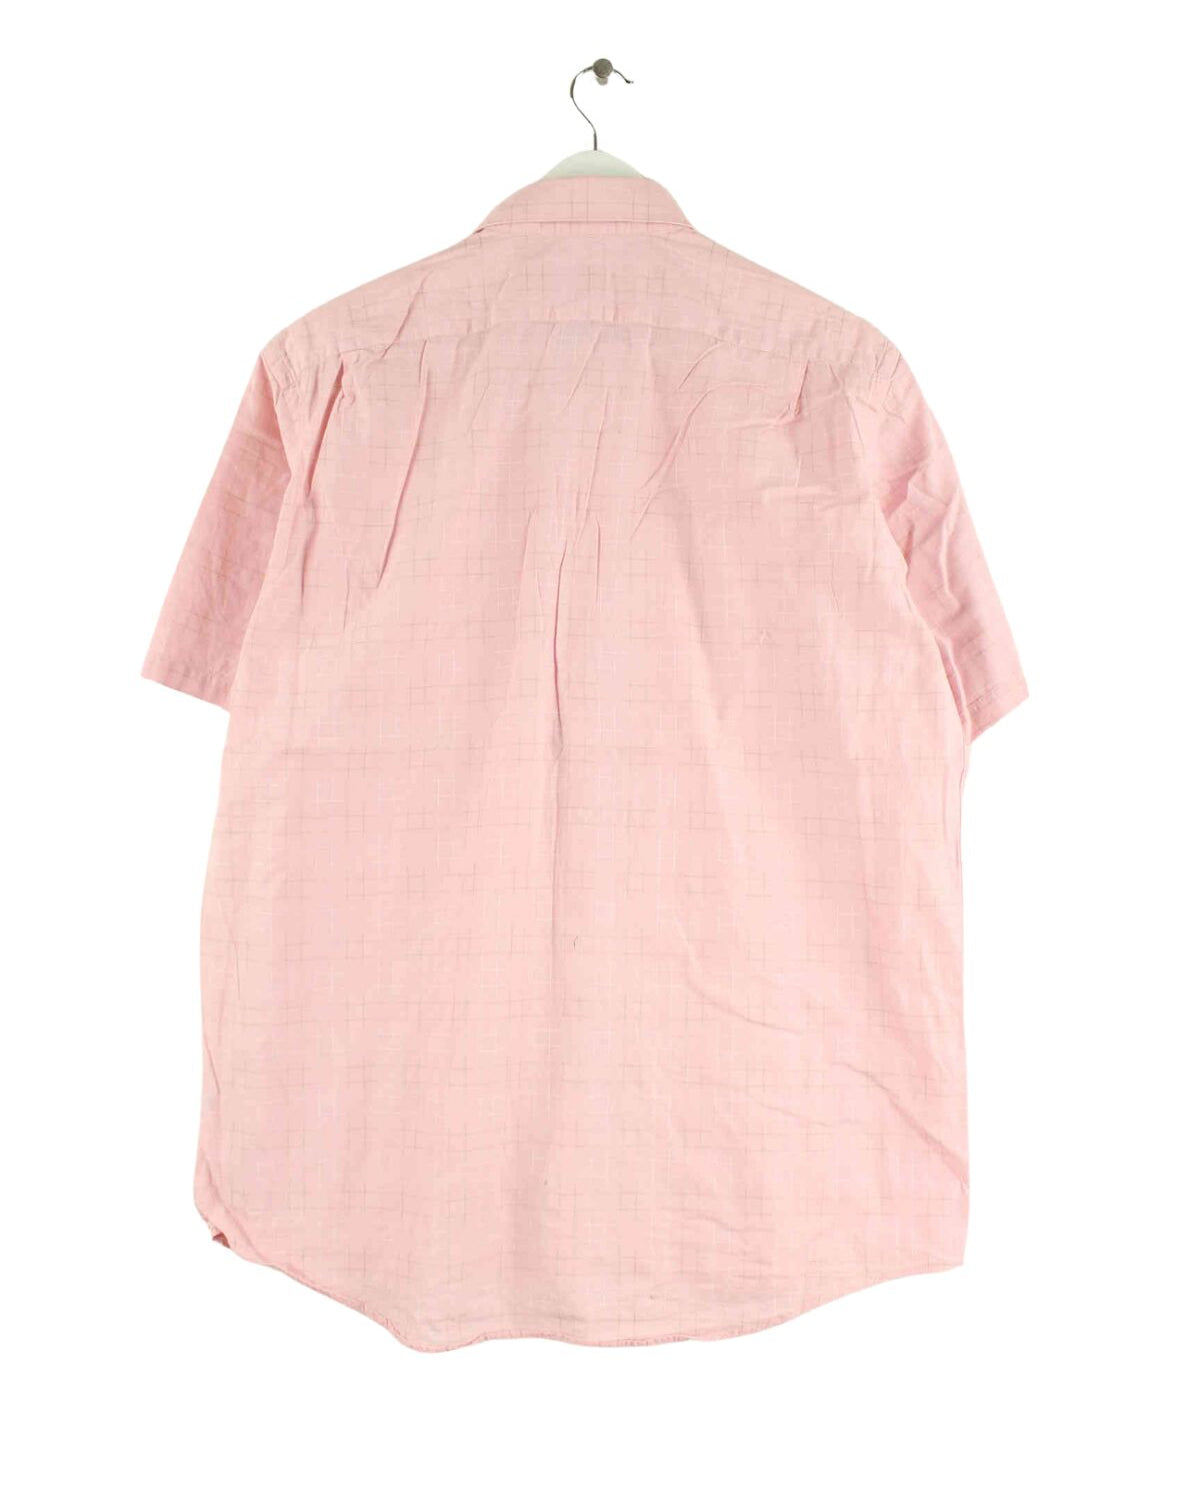 Lacoste Striped Hemd Pink XL (back image)